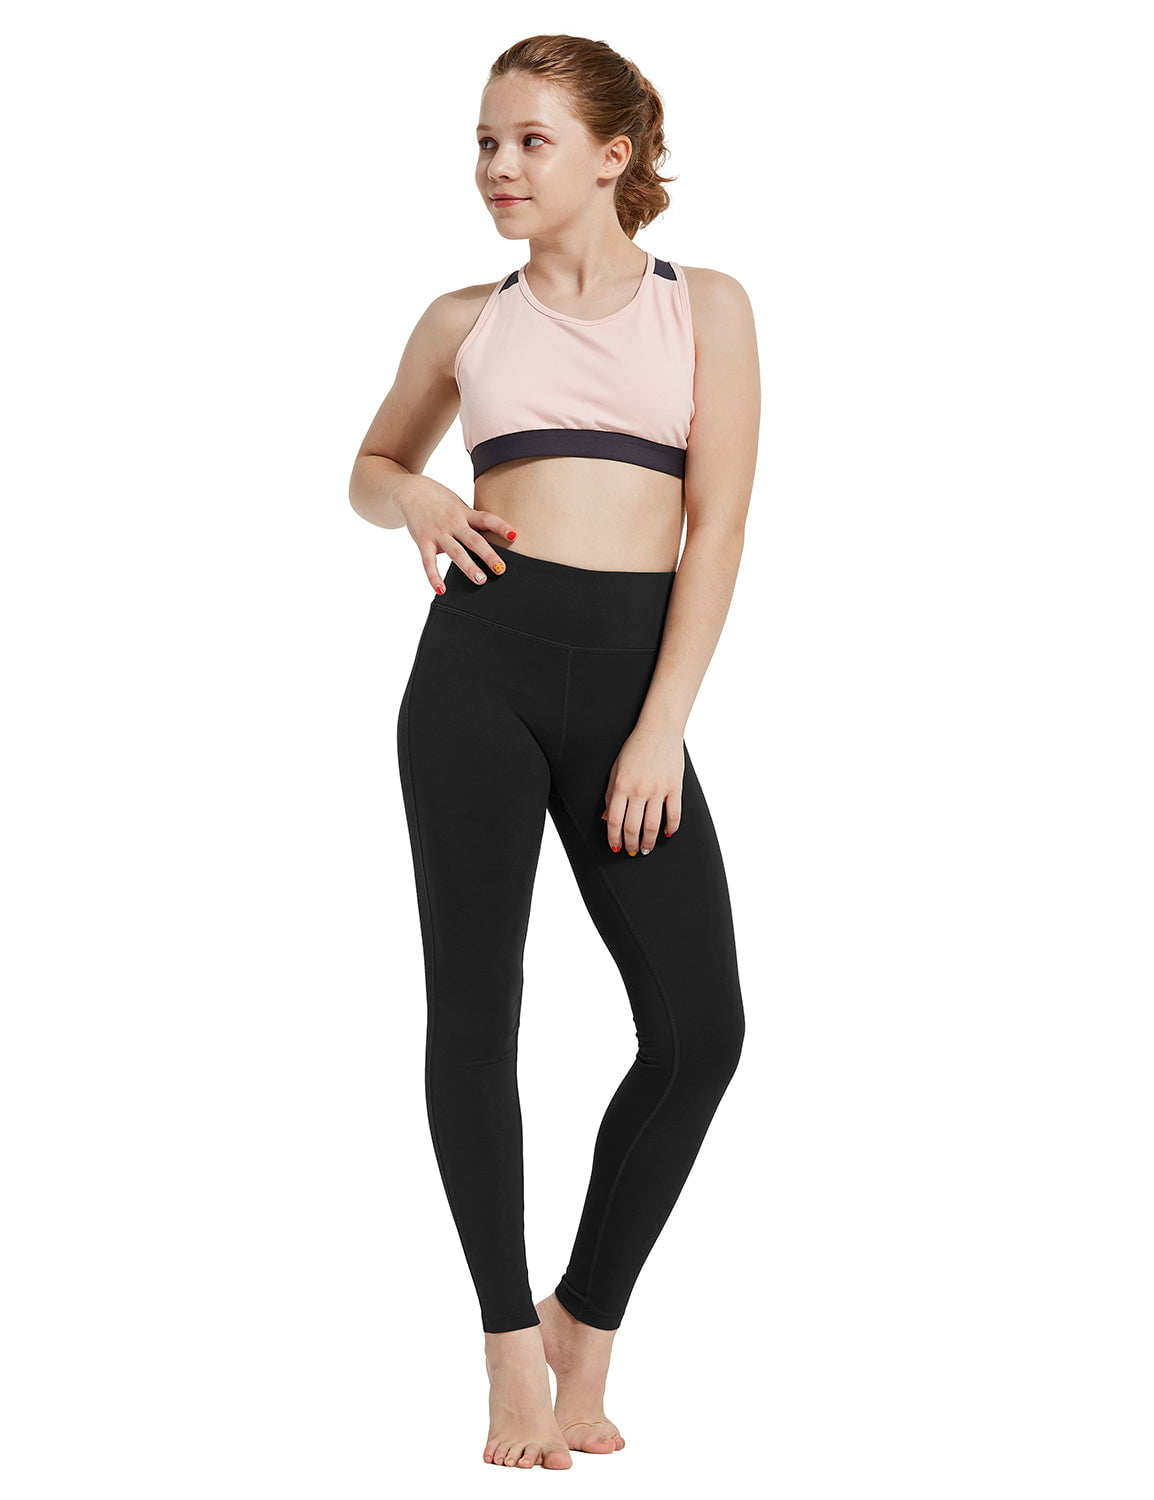 BALEAF Youth Girl's Athletic Dance Leggings Compression Pants Running  Active Yoga Tights with Back Pocket Black M